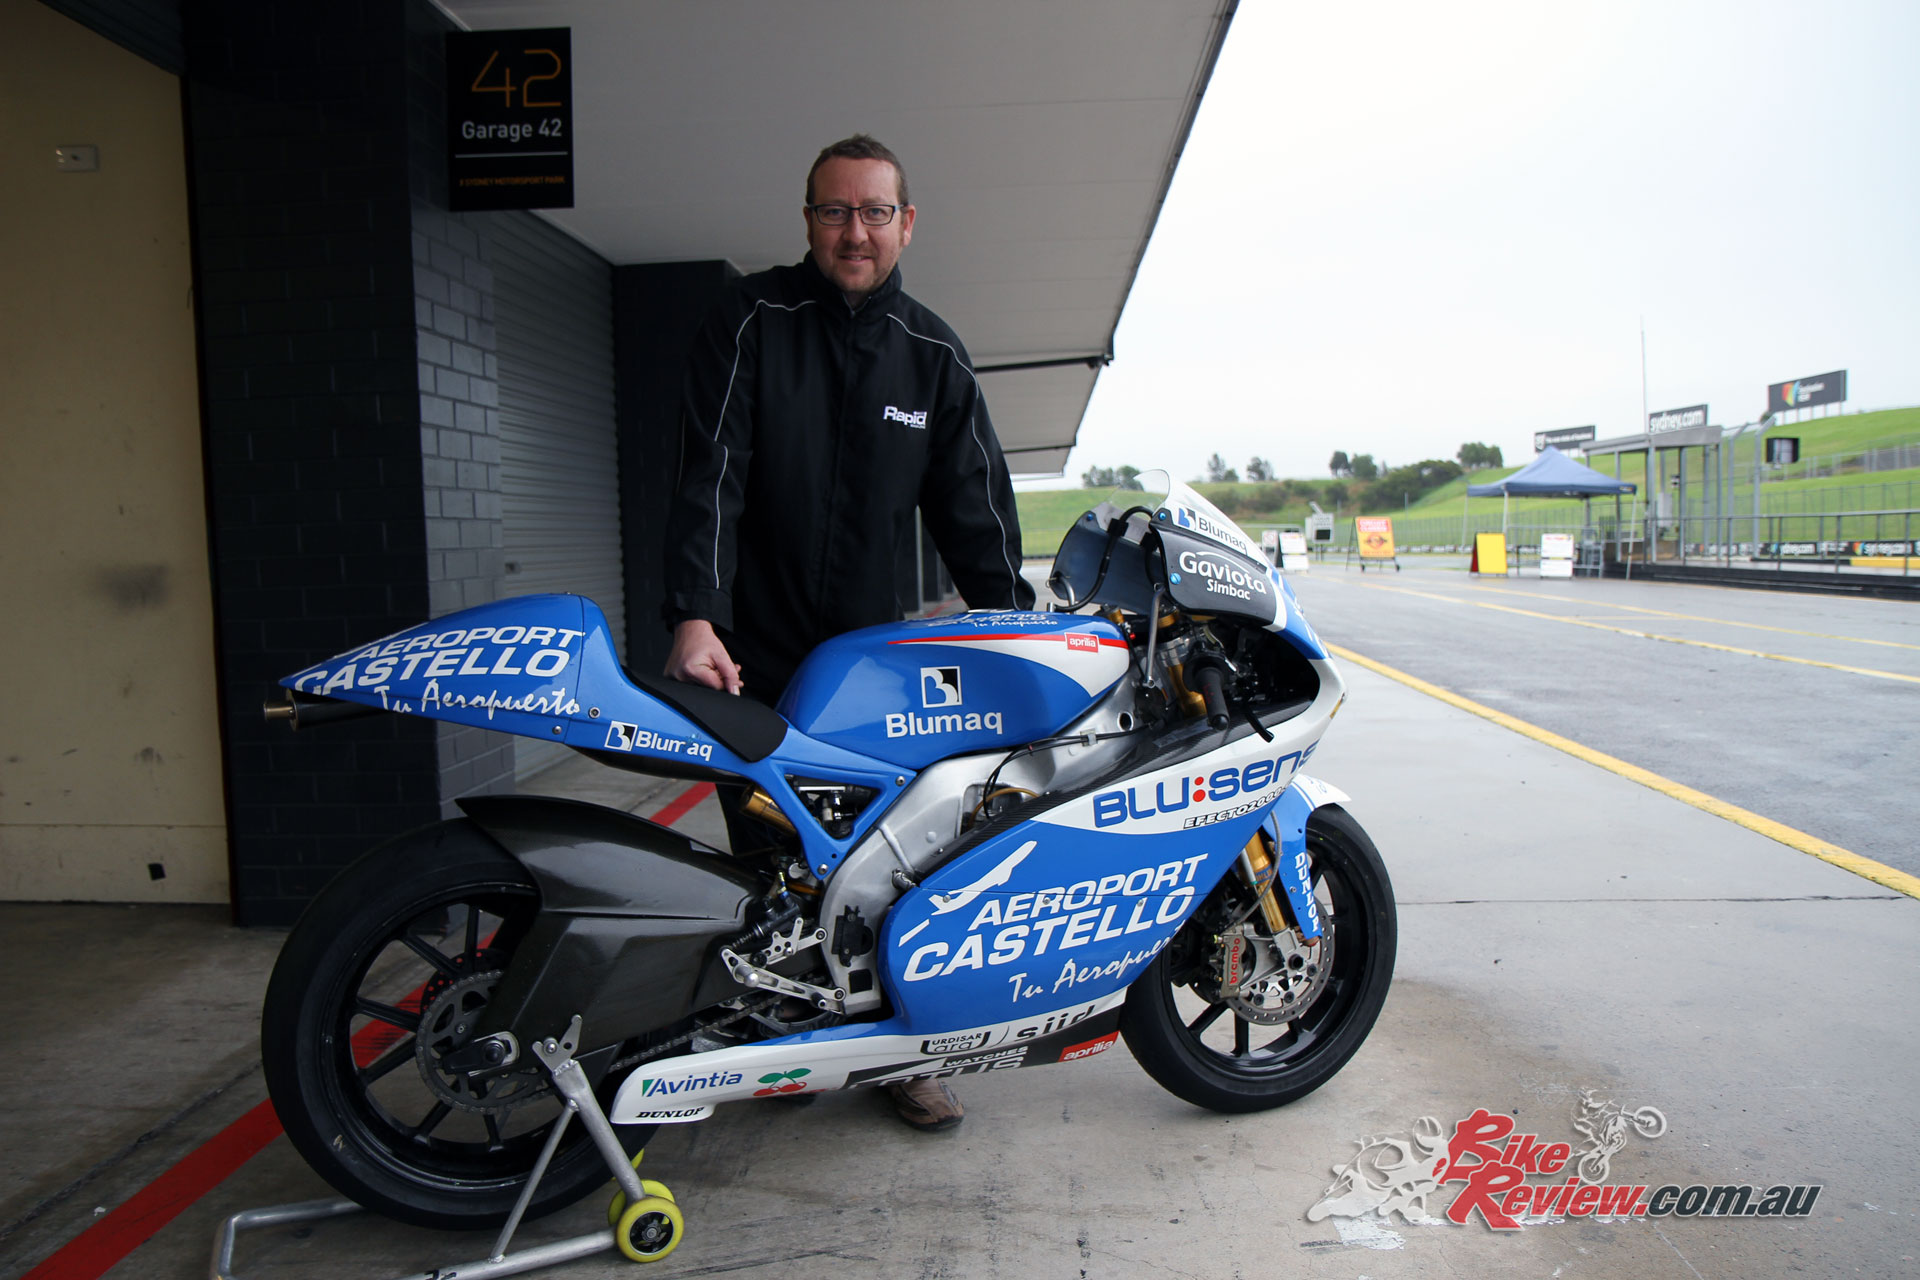 Jeff with the bike at Sydney Motorsport Park.